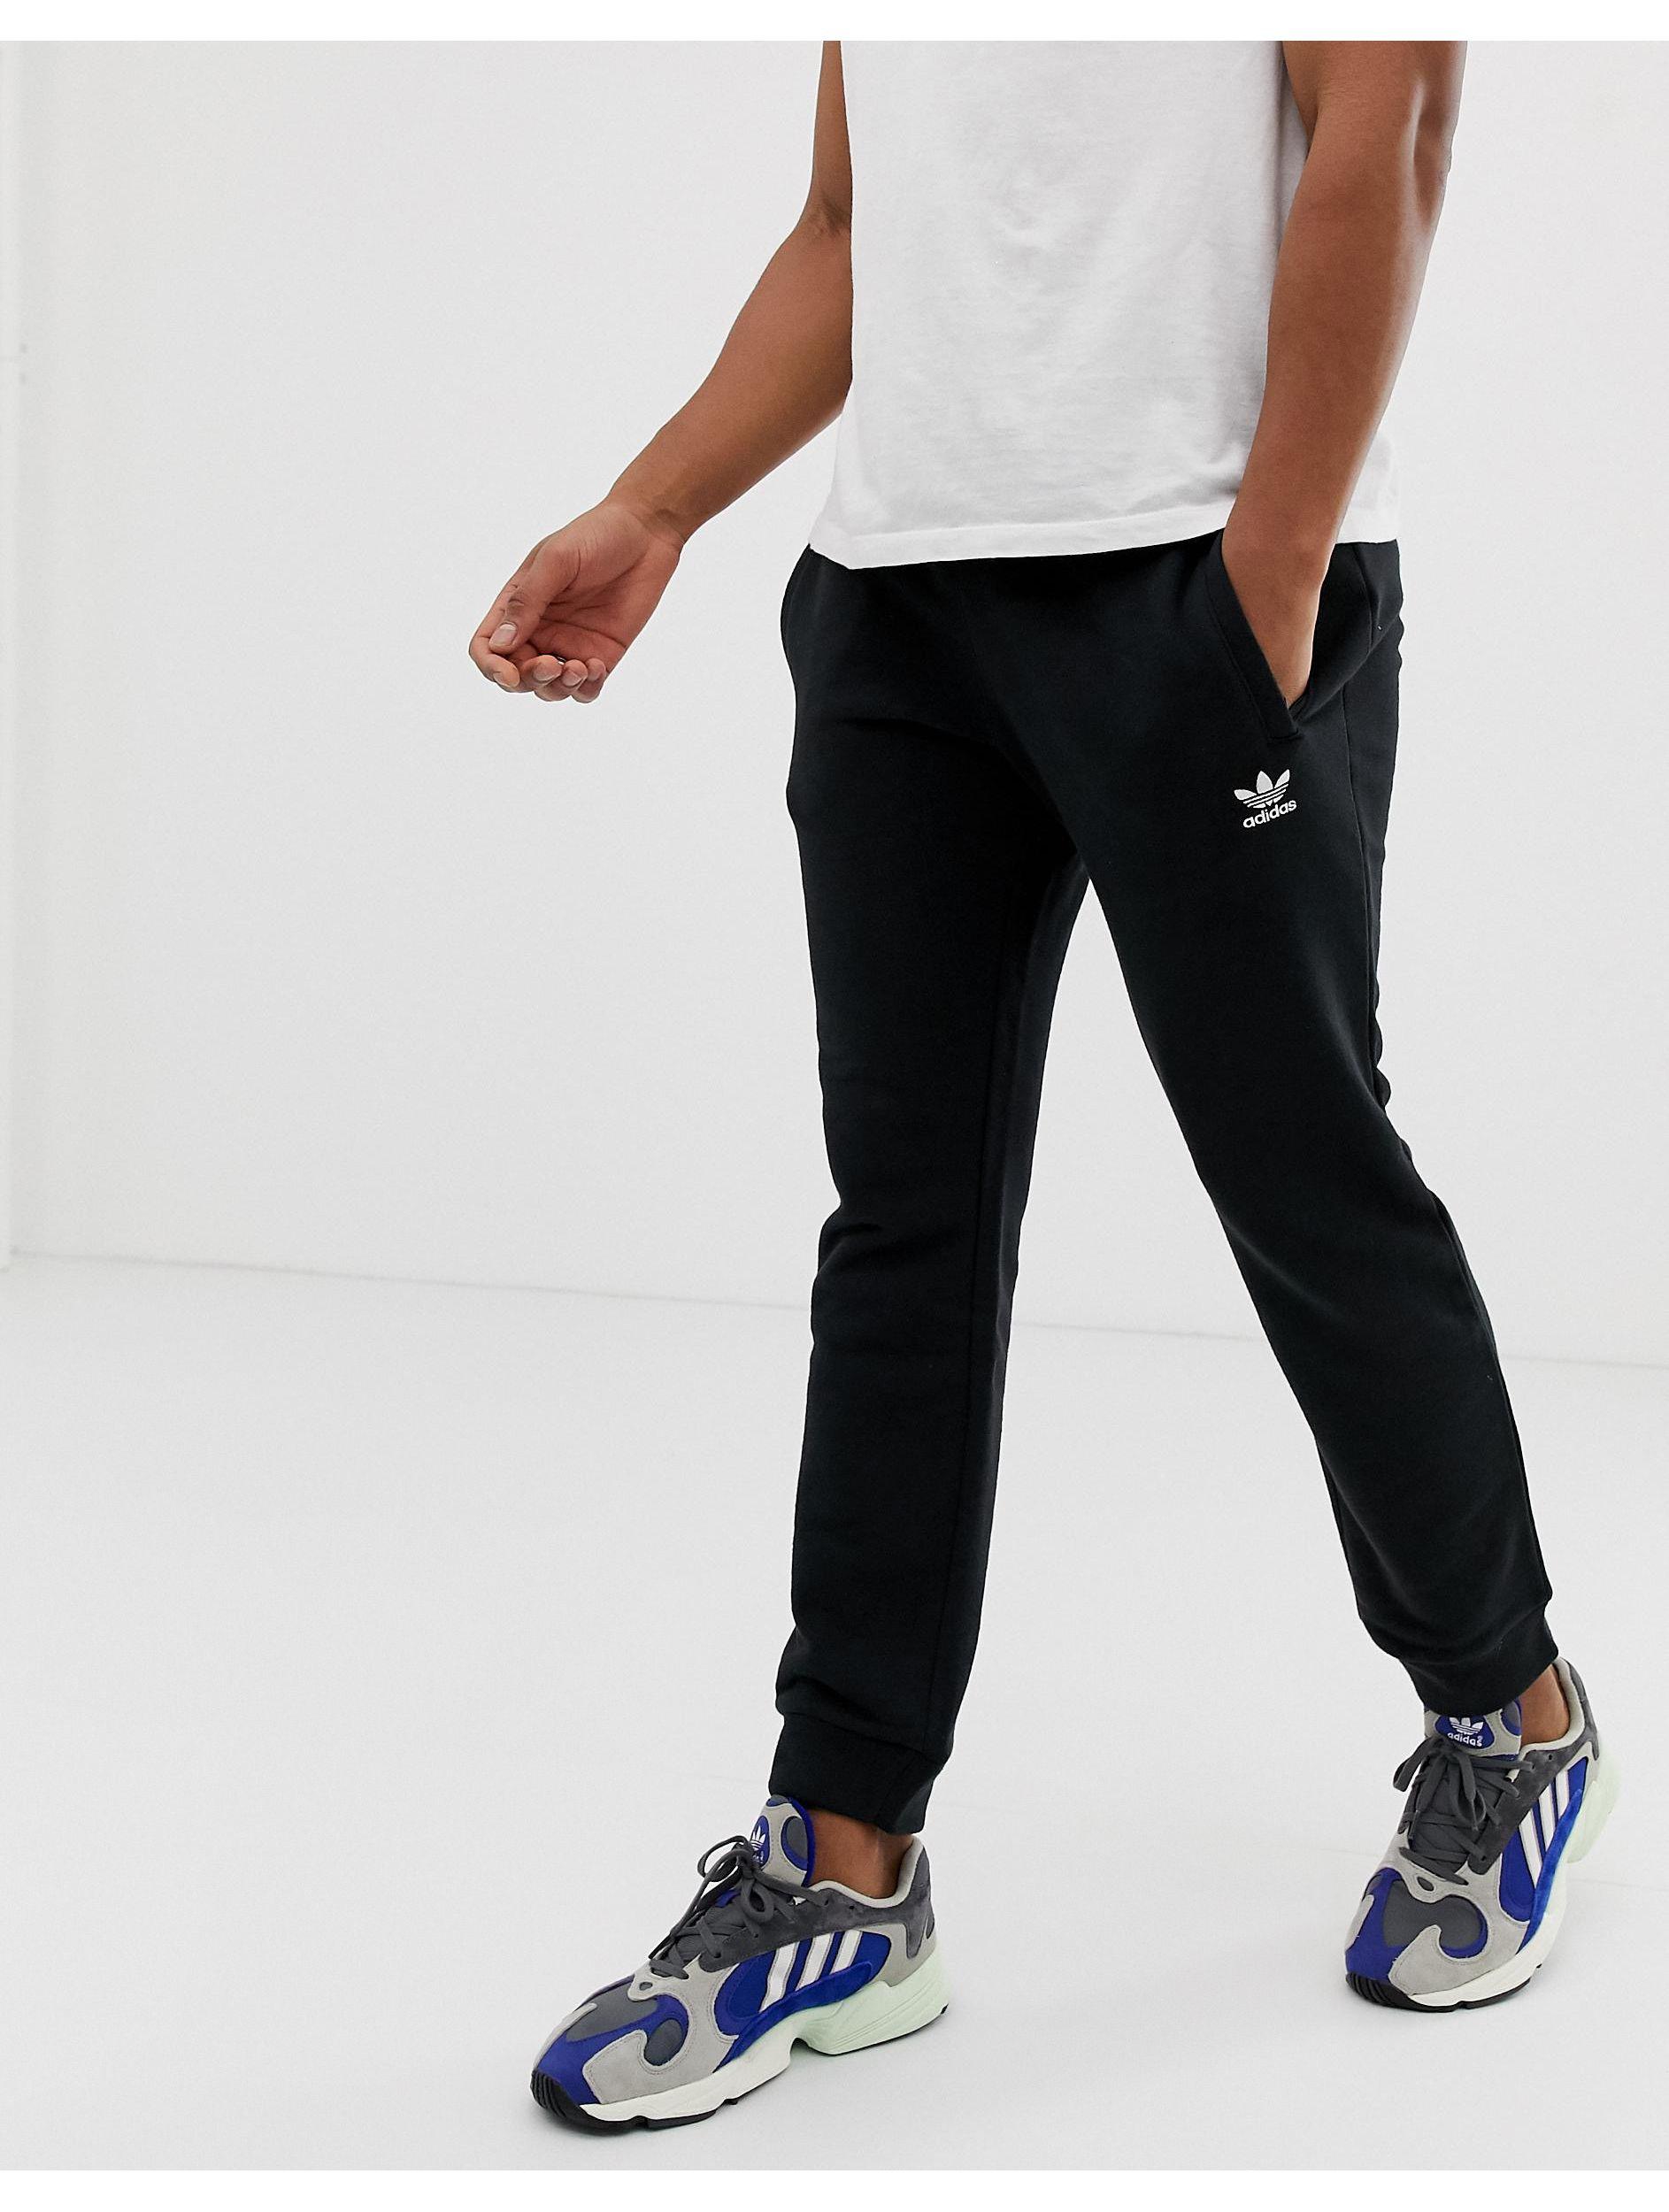 adidas Originals Cotton Essentials Logo joggers in Black for Men - Save 19%  - Lyst